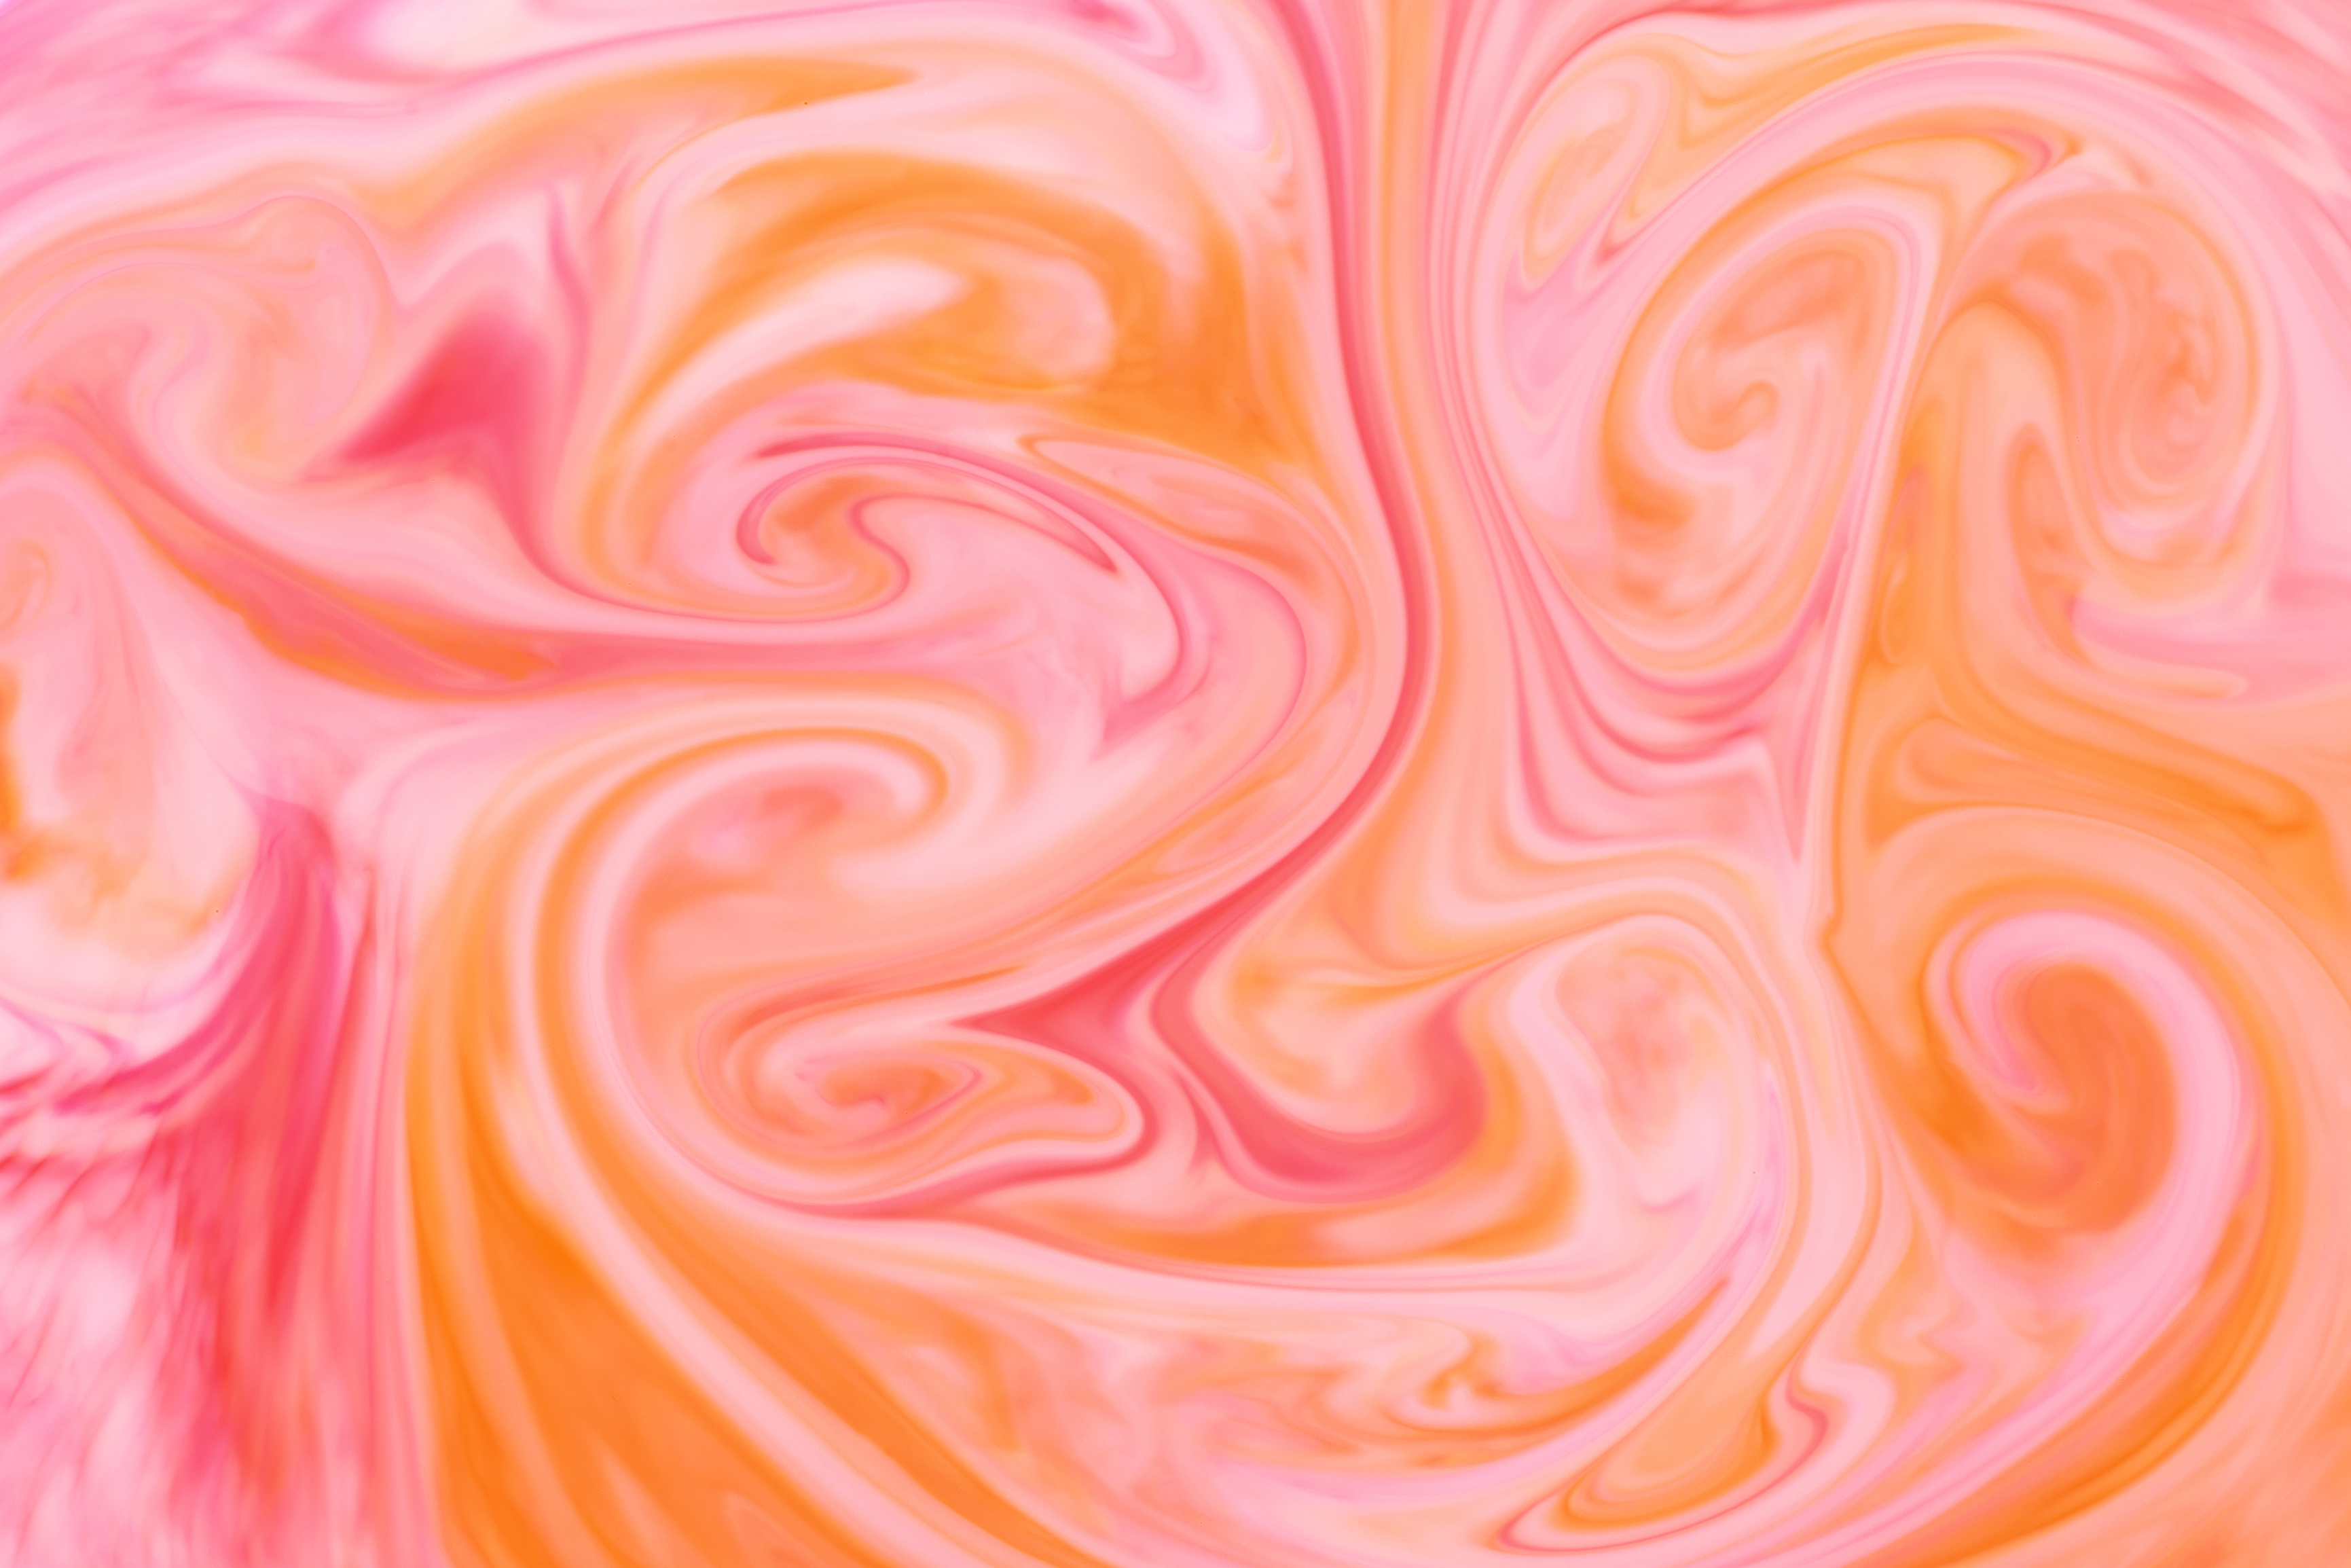  Swirling of  Blended Orange and Pink Ink